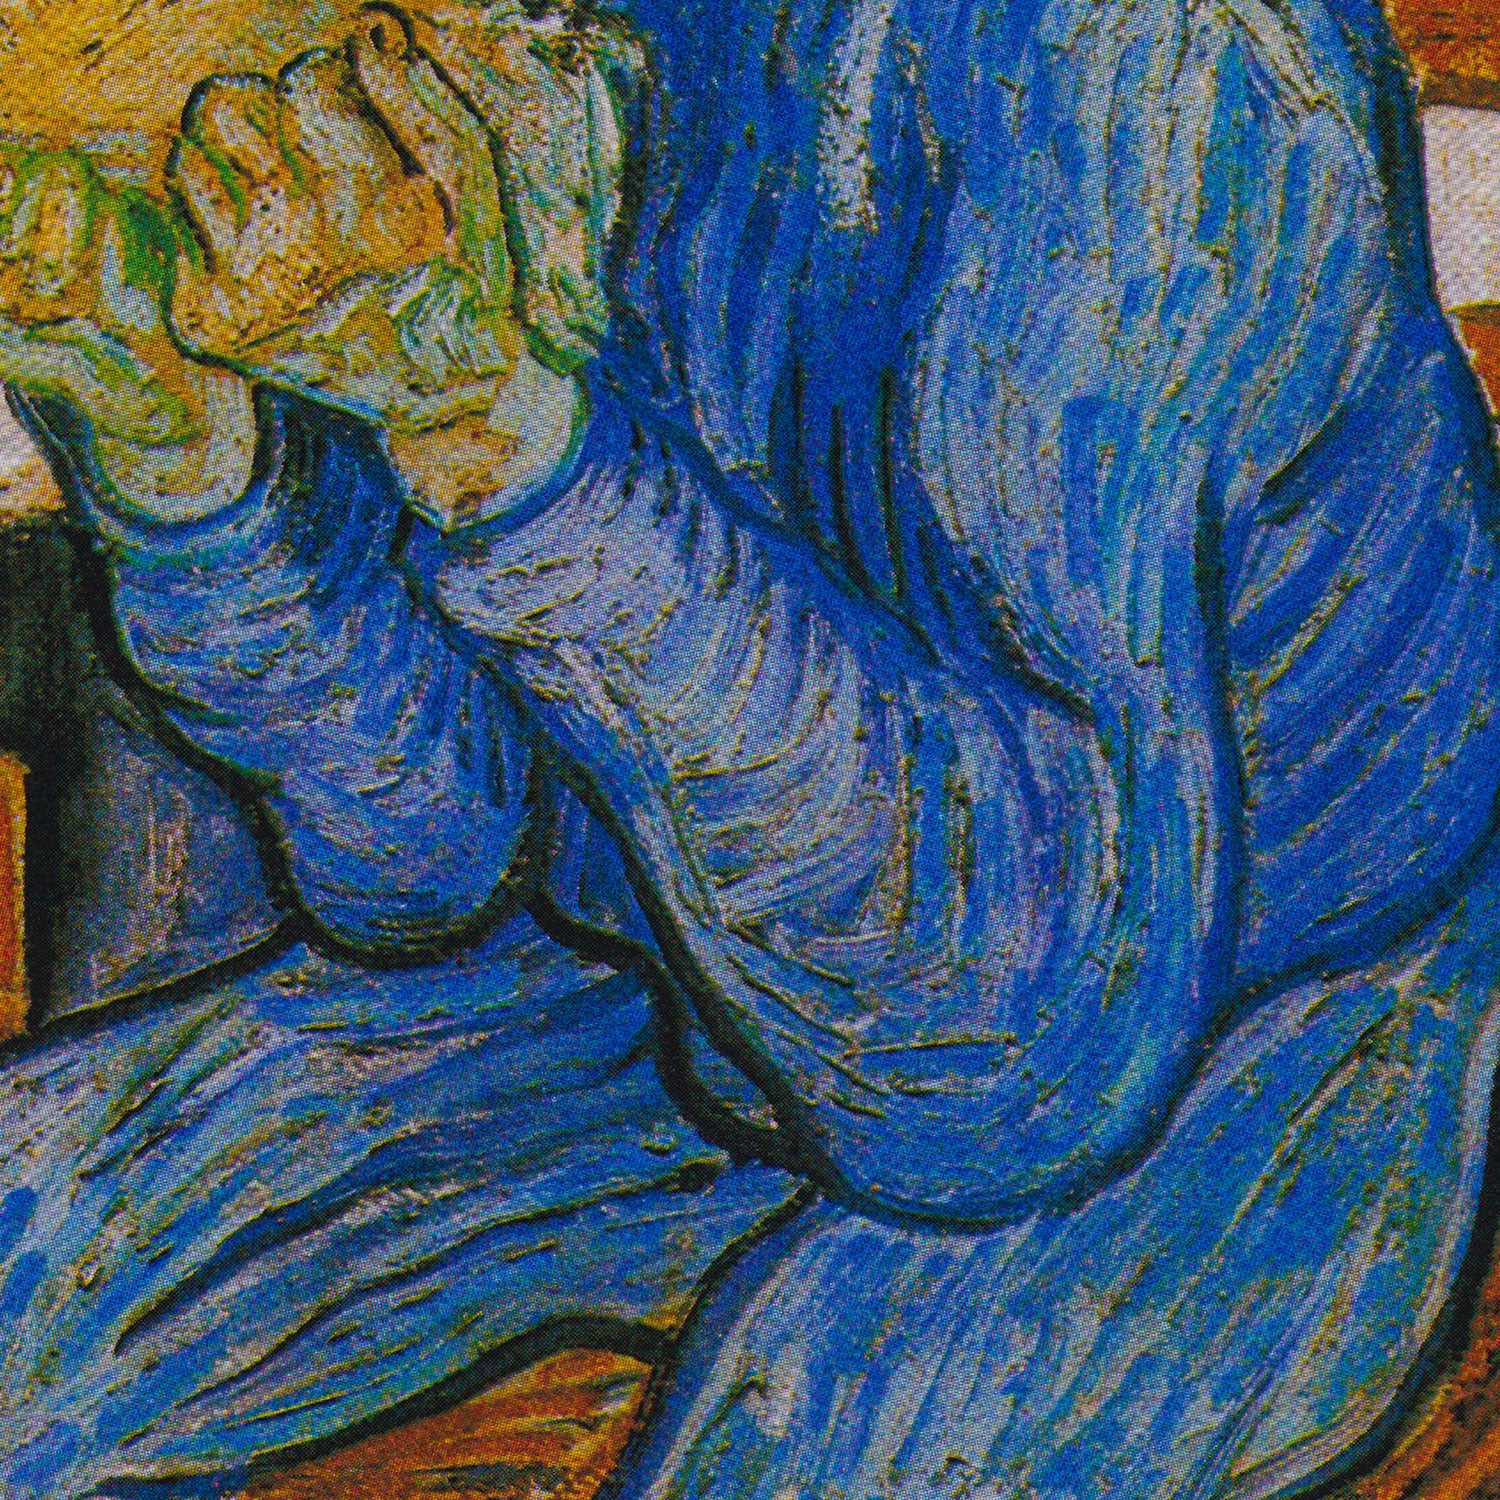 Vincent van Gogh Old Man In Sorrow Canvas Wall Art